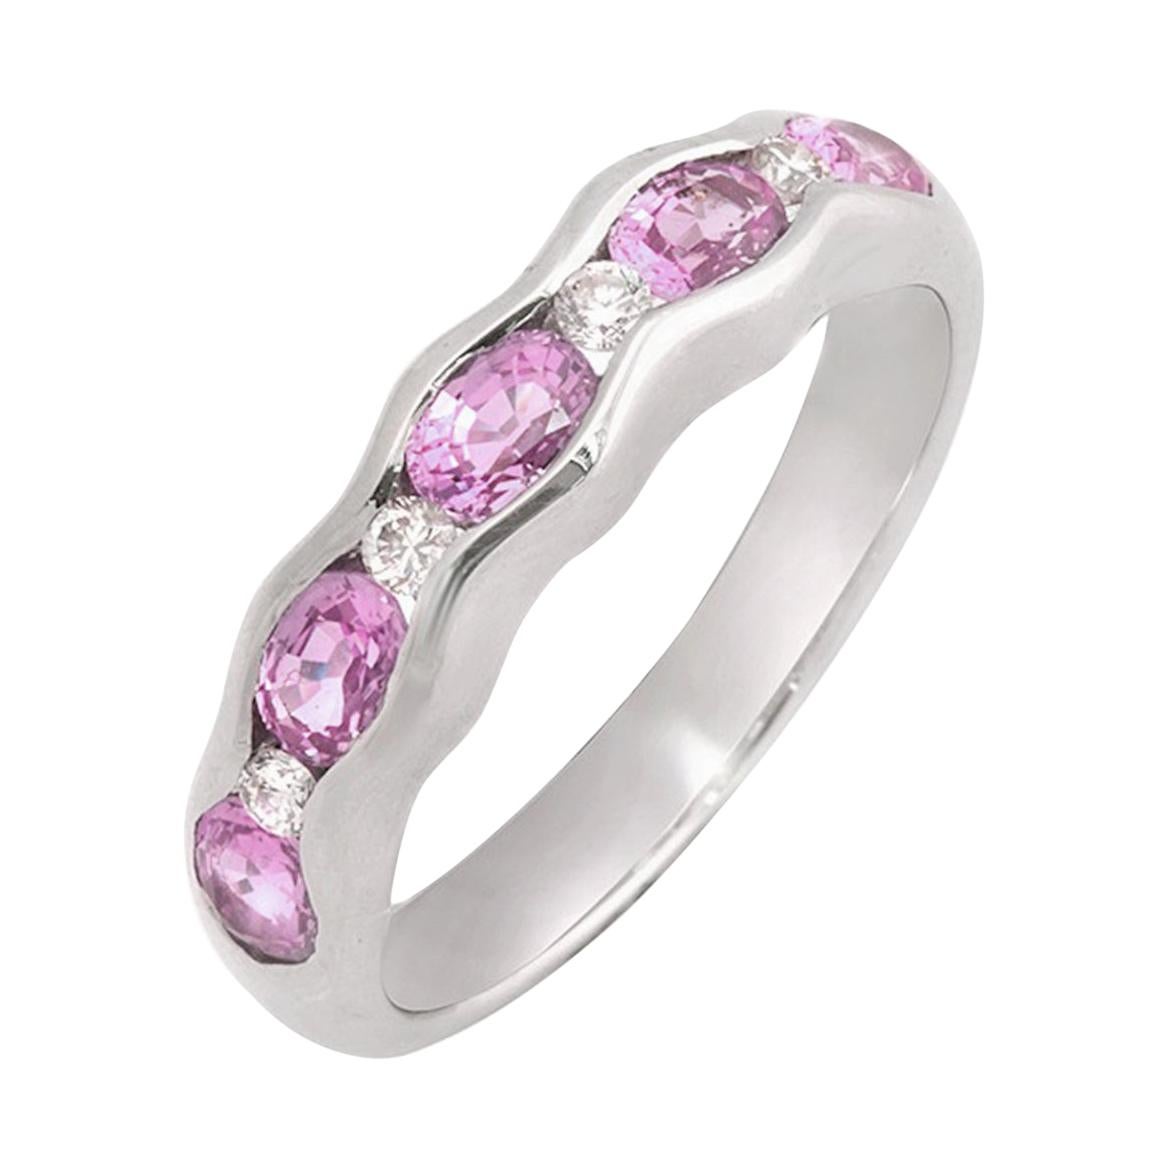 1.37 Carat Pink Sapphire and 0.14 Carat Diamonds 18 Karat Gold Wedding Band Ring